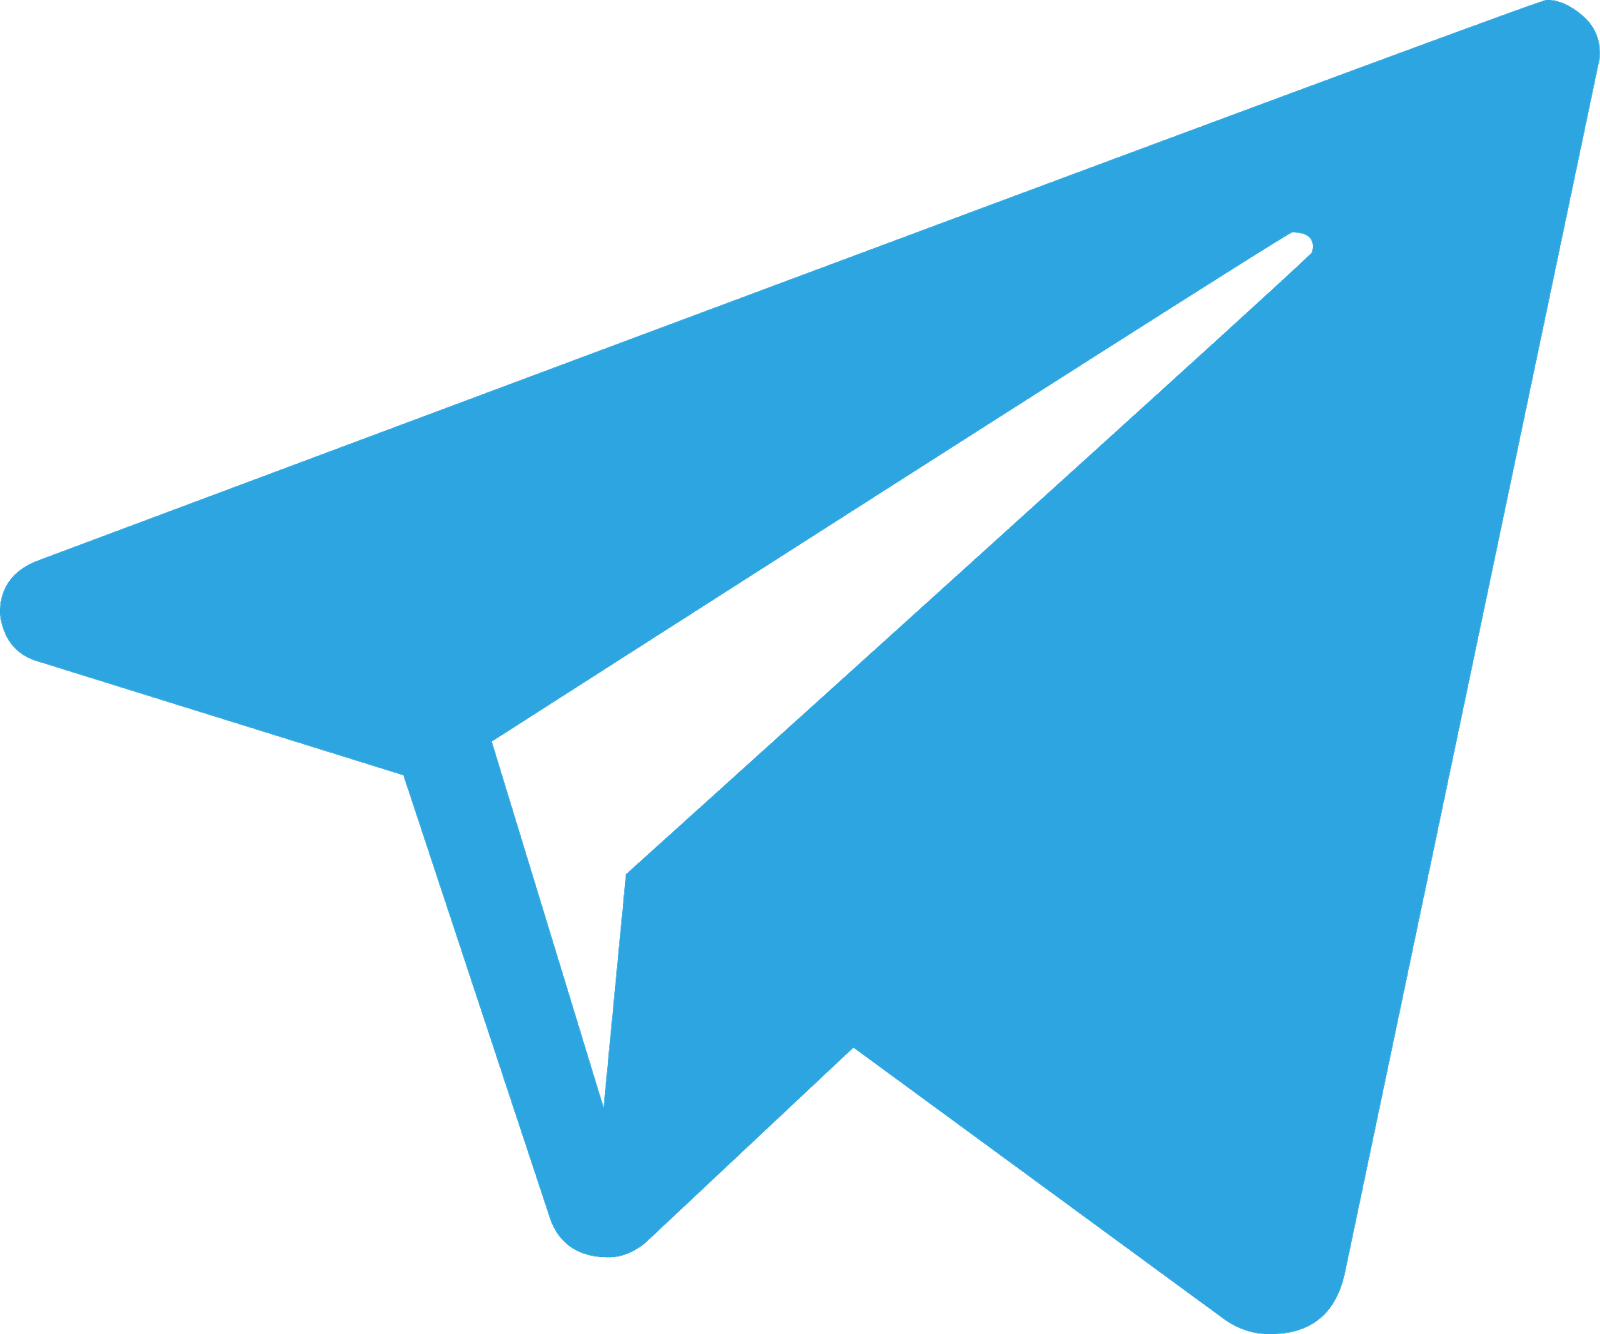 logo telegram vector